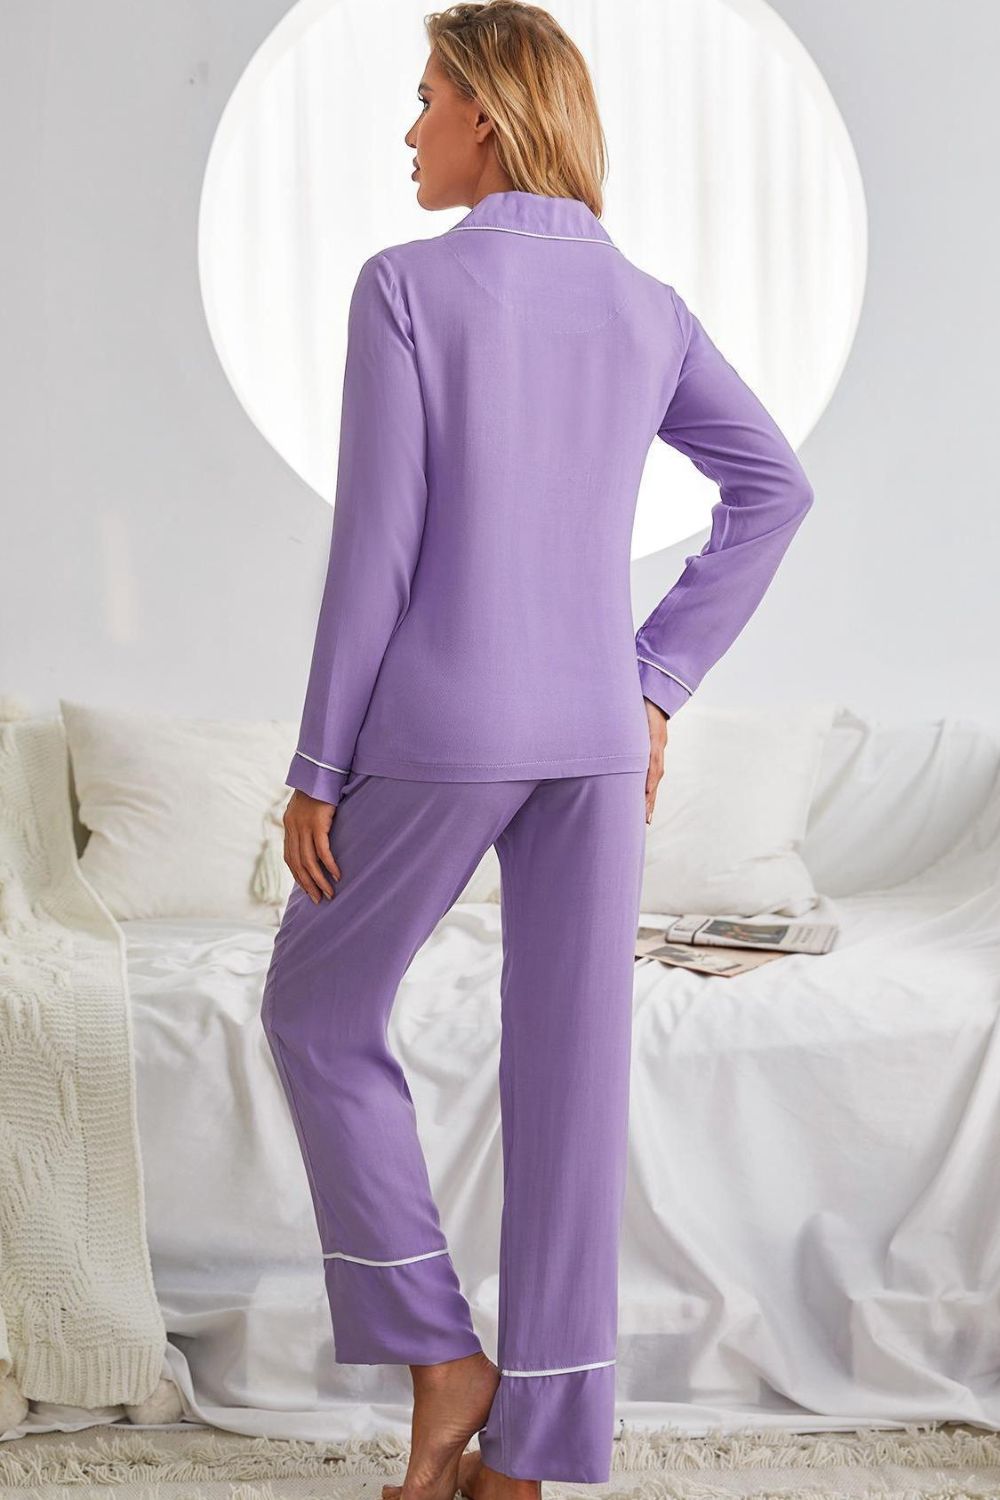 Women’s Contrast Lapel Collar Shirt and Pants Pajama Set with Pockets